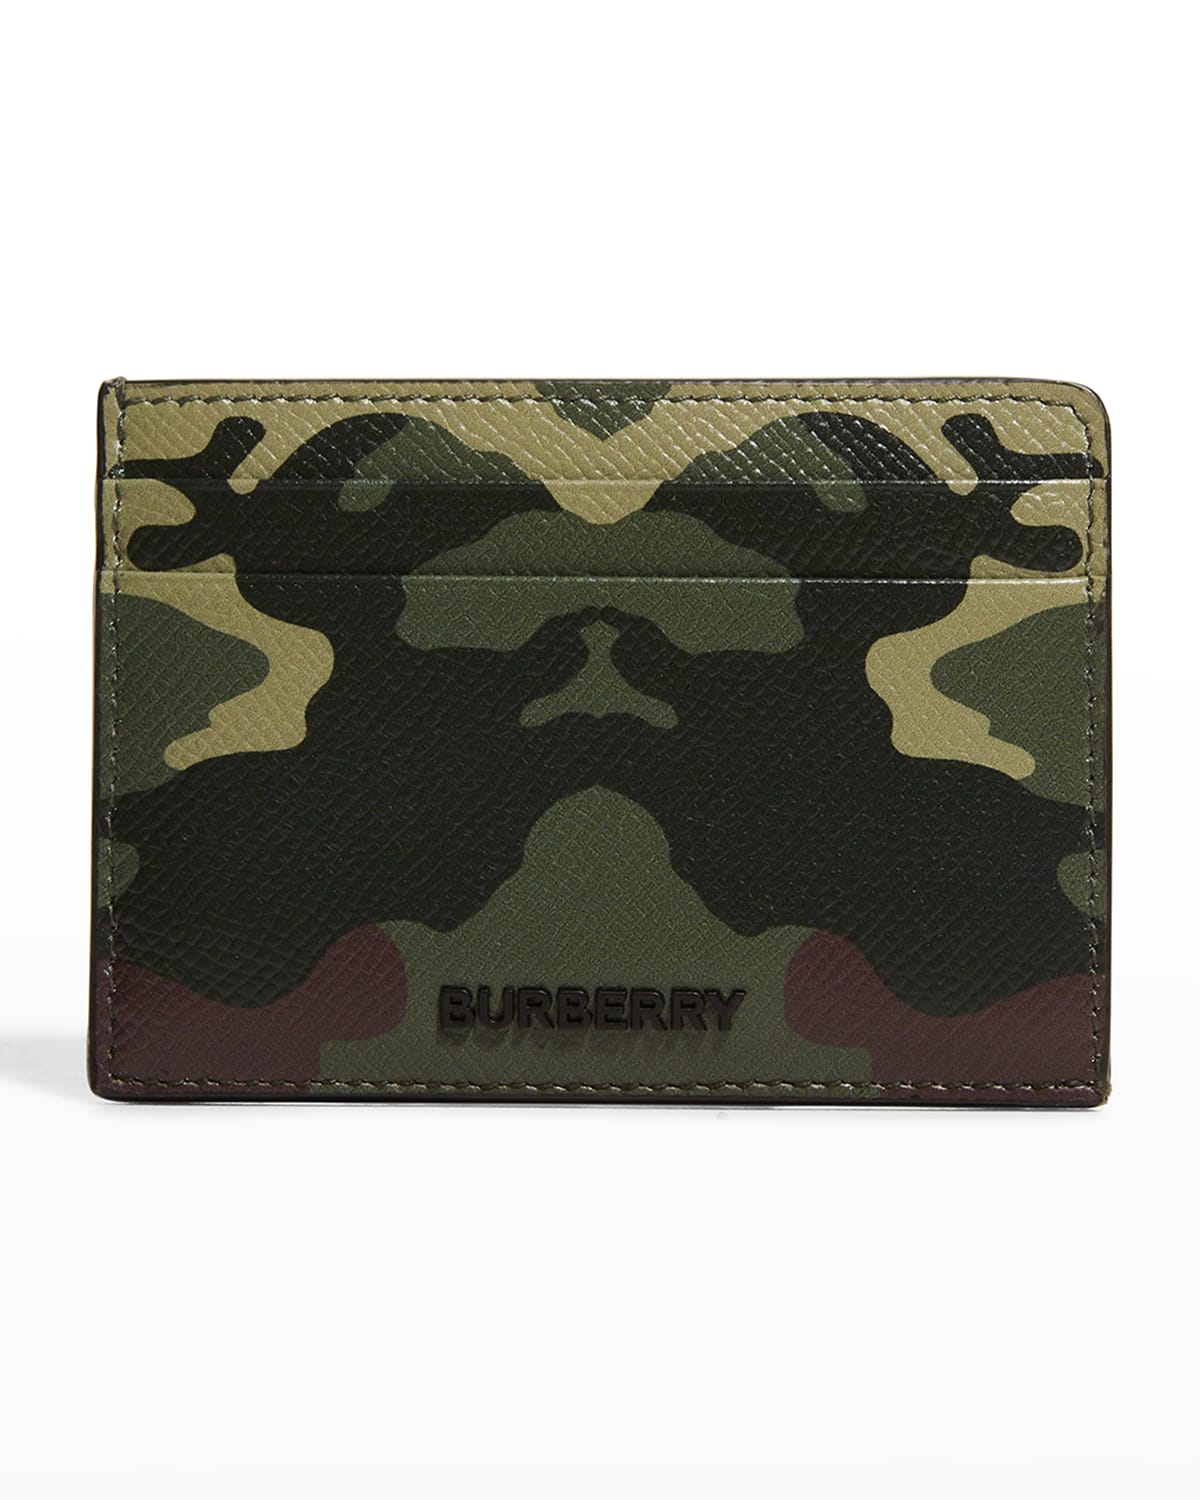 Burberry Leather Card Case | Neiman Marcus